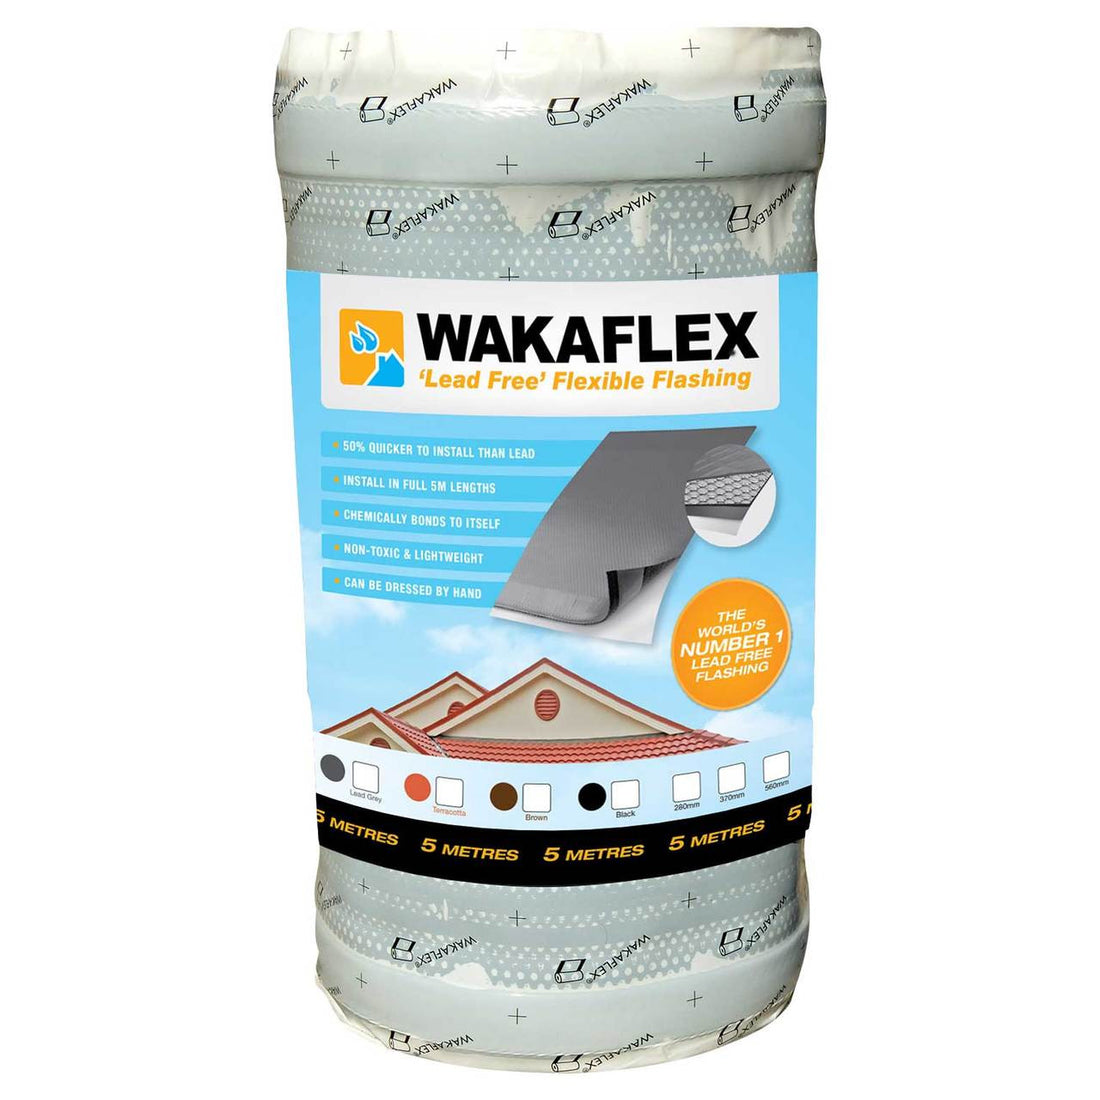 Wakaflex - The World&